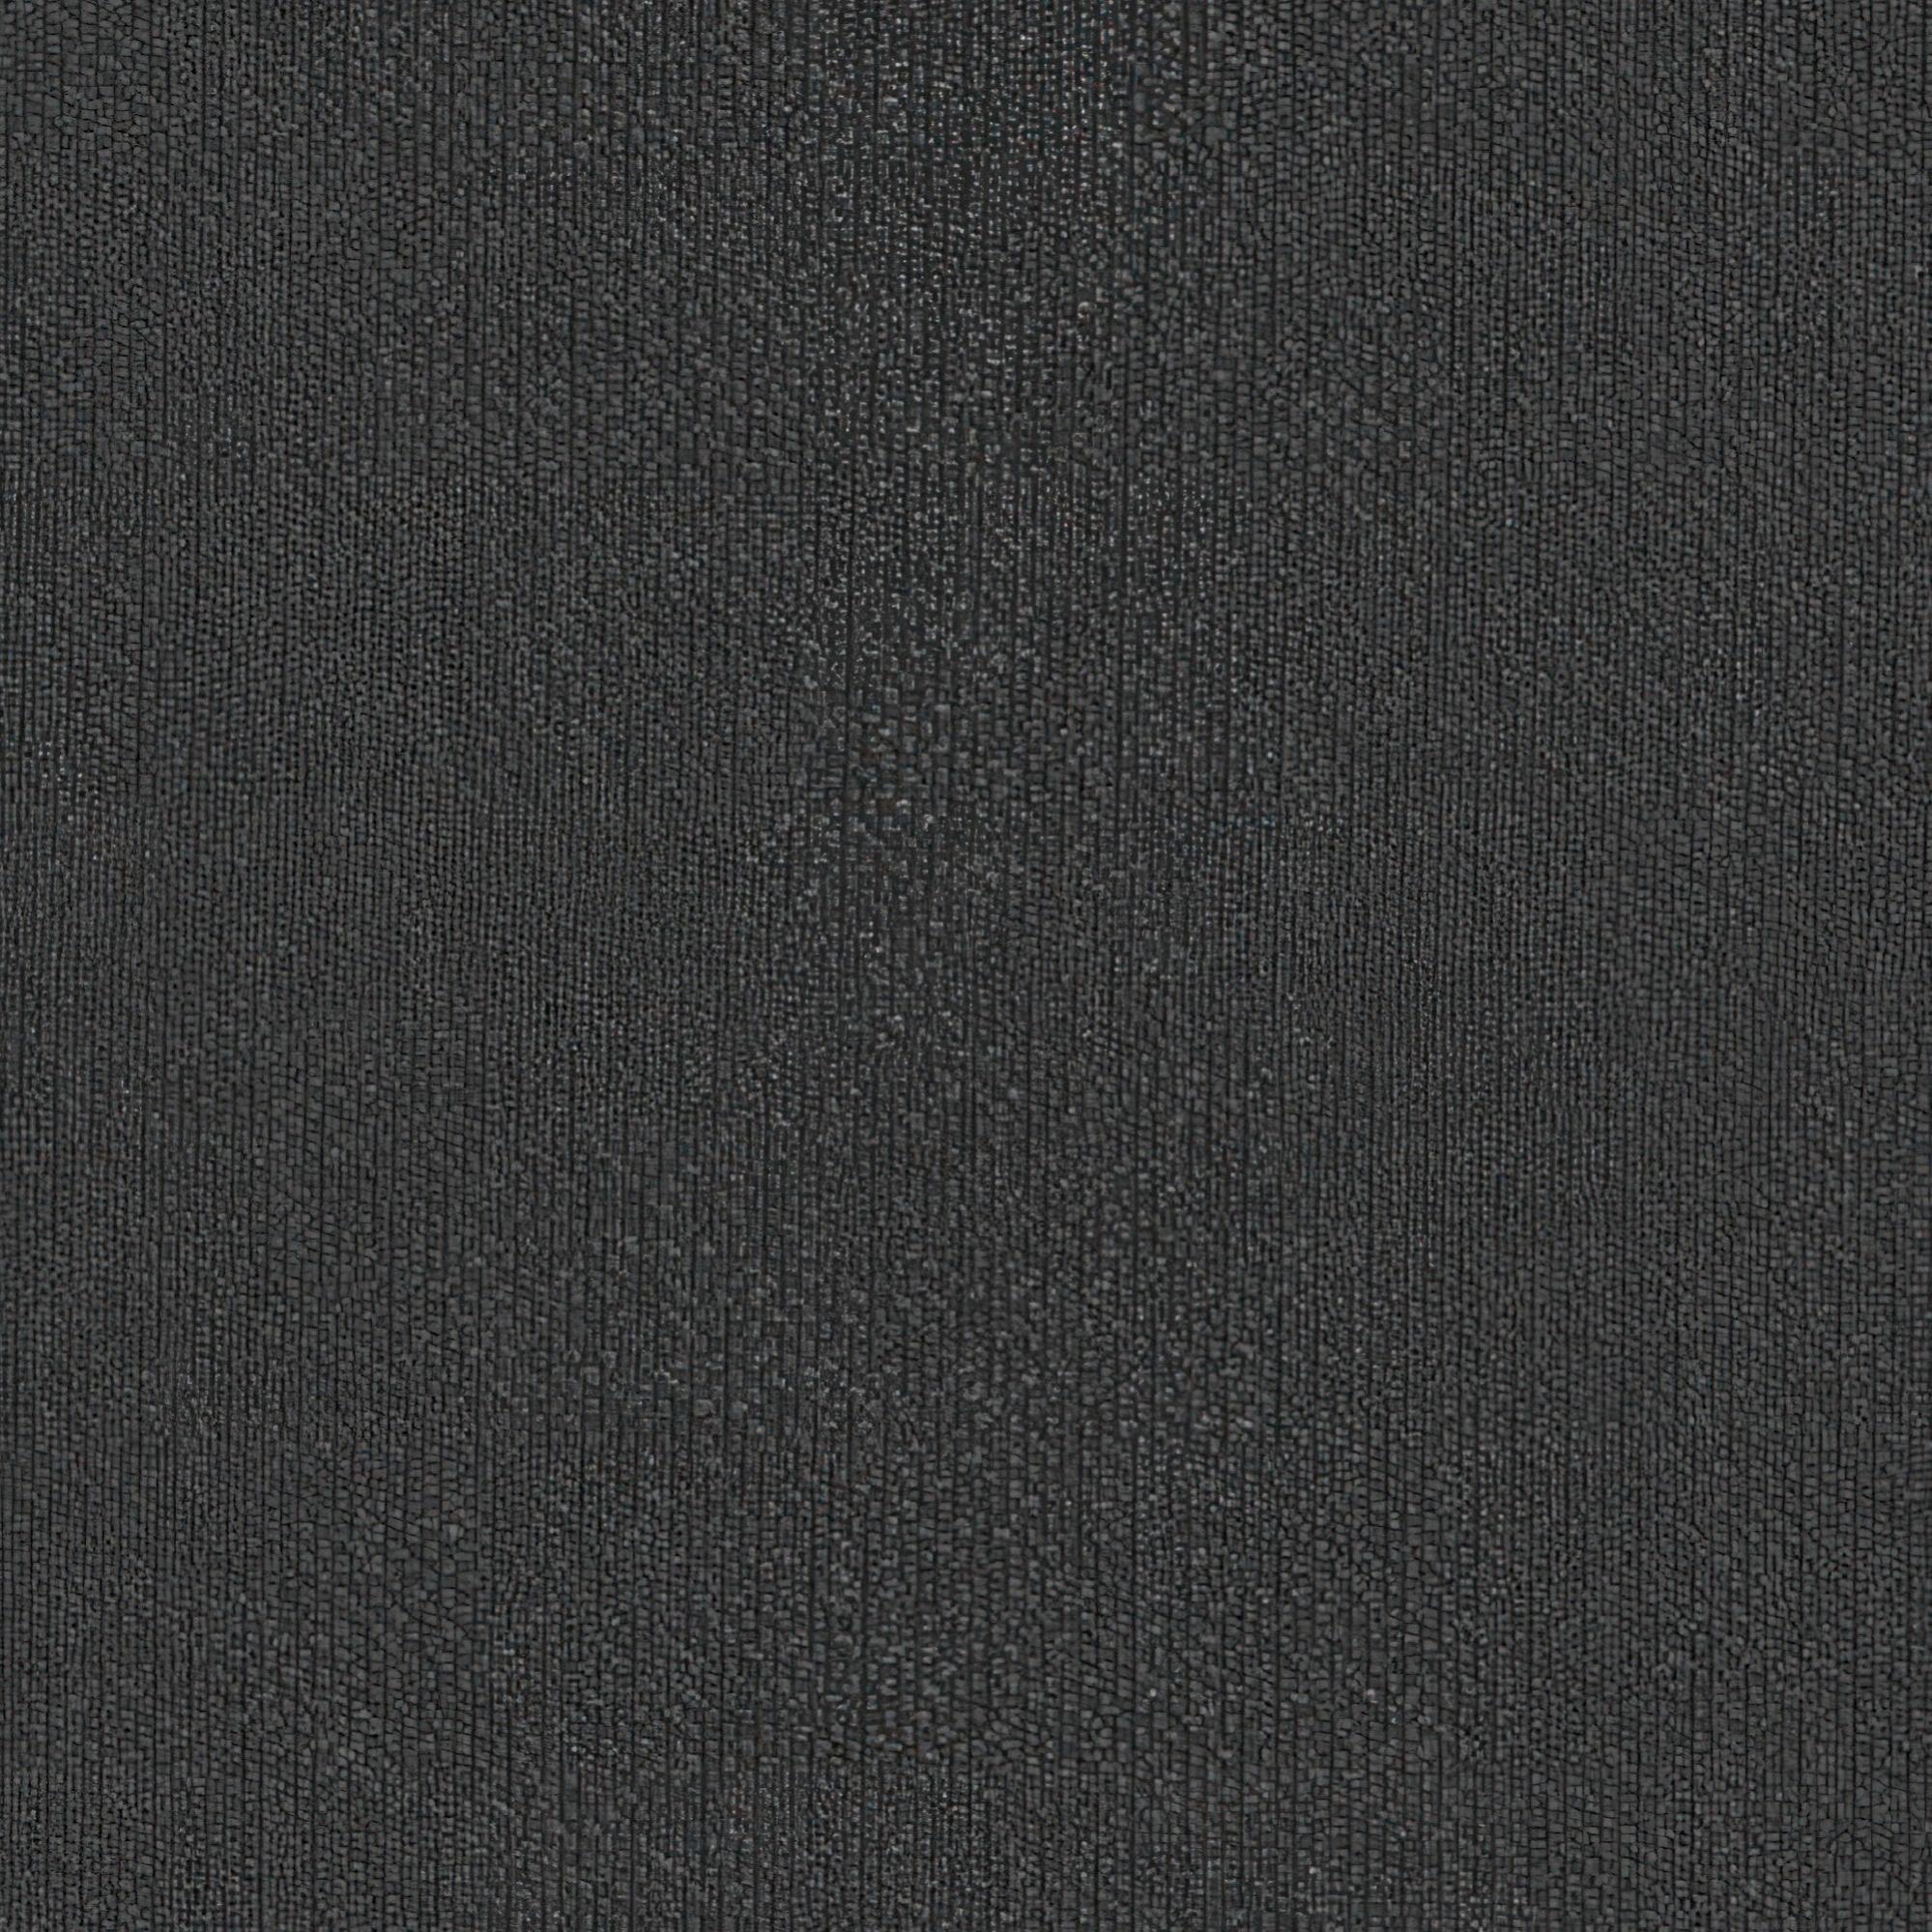 Tela al corte tapicería loneta baracoa negro ancho 140 cm